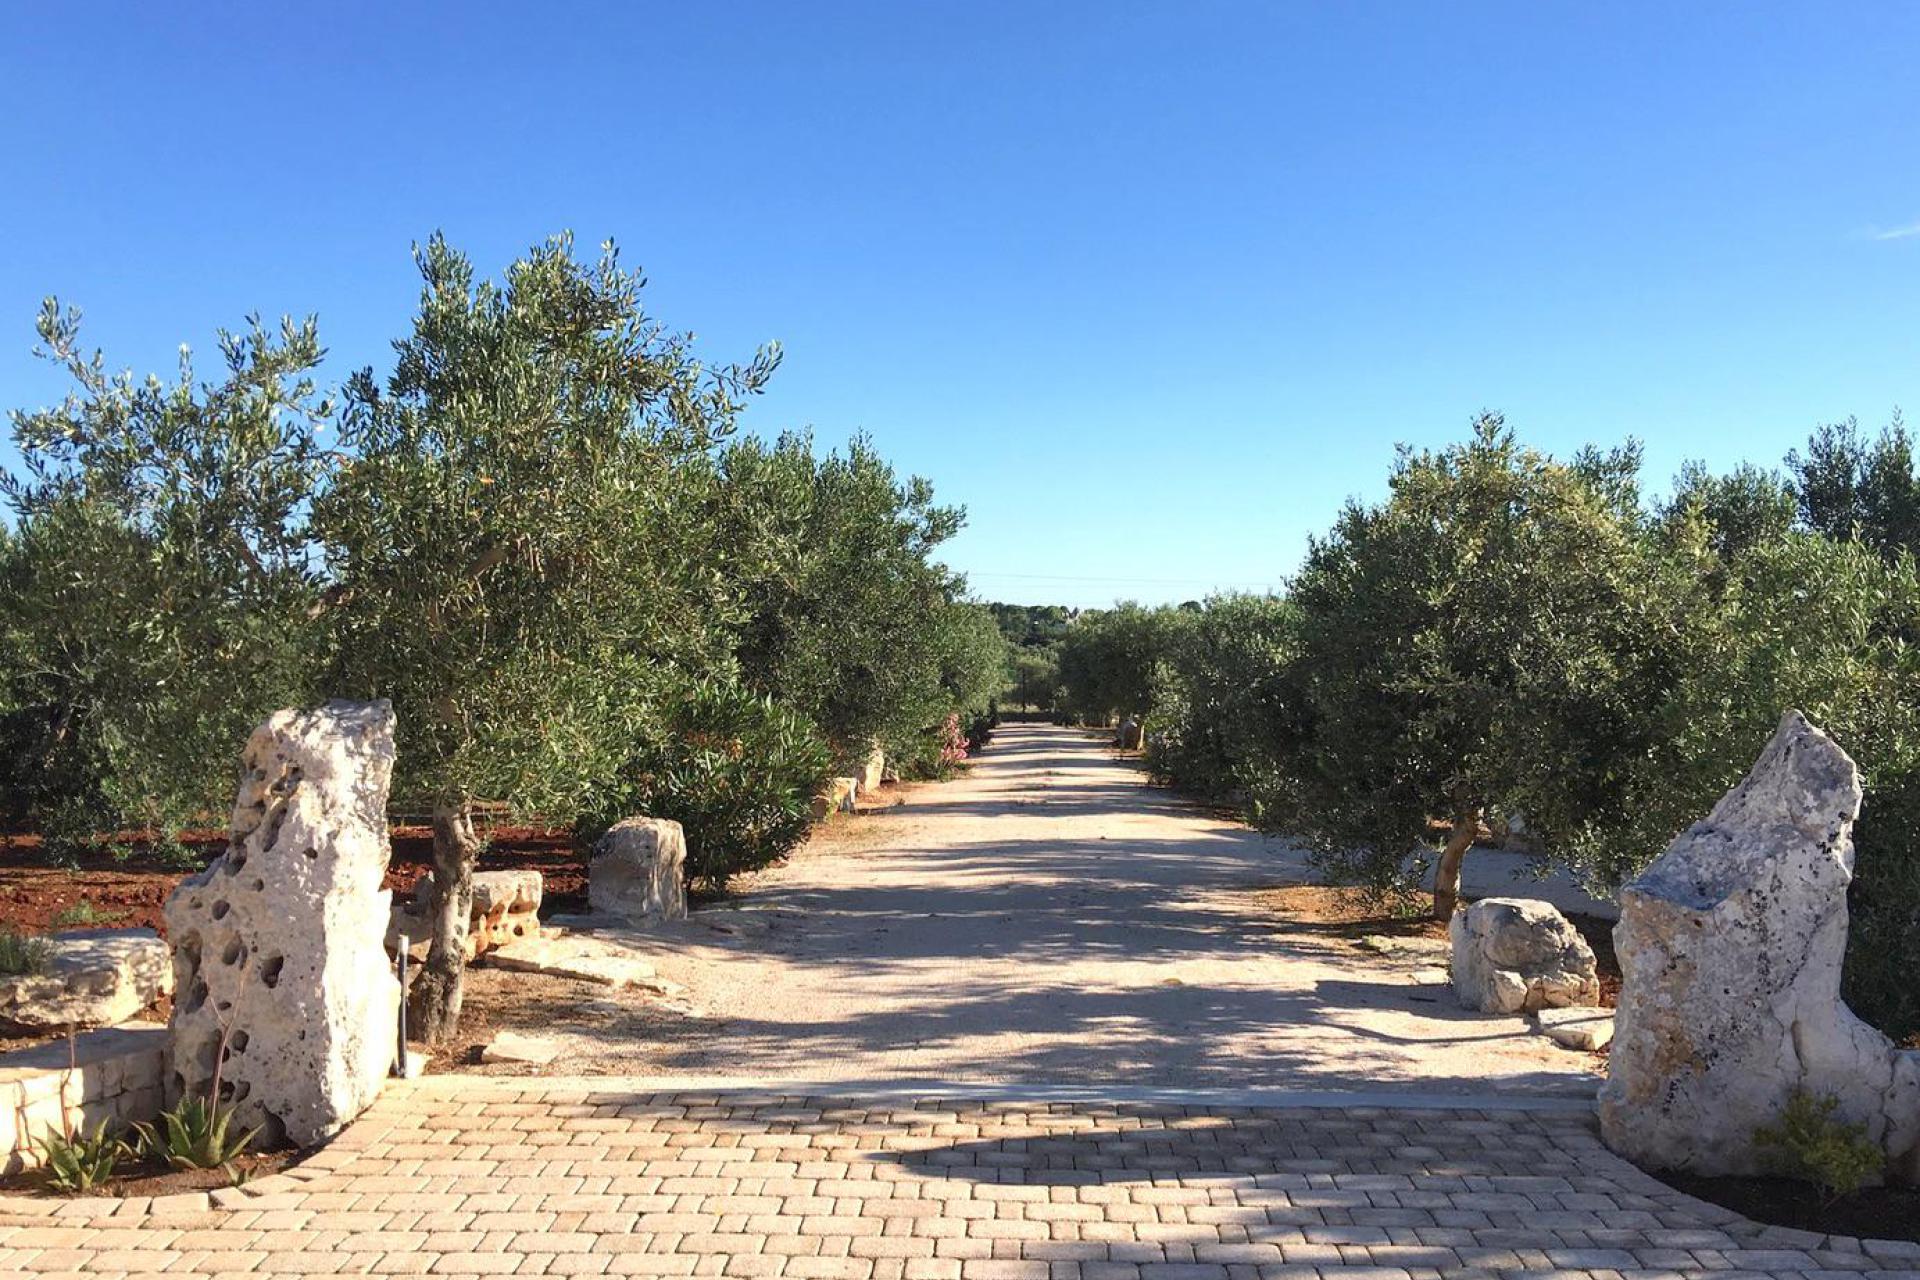 Agriturismo Puglia Private trullo with pool in olive orchard